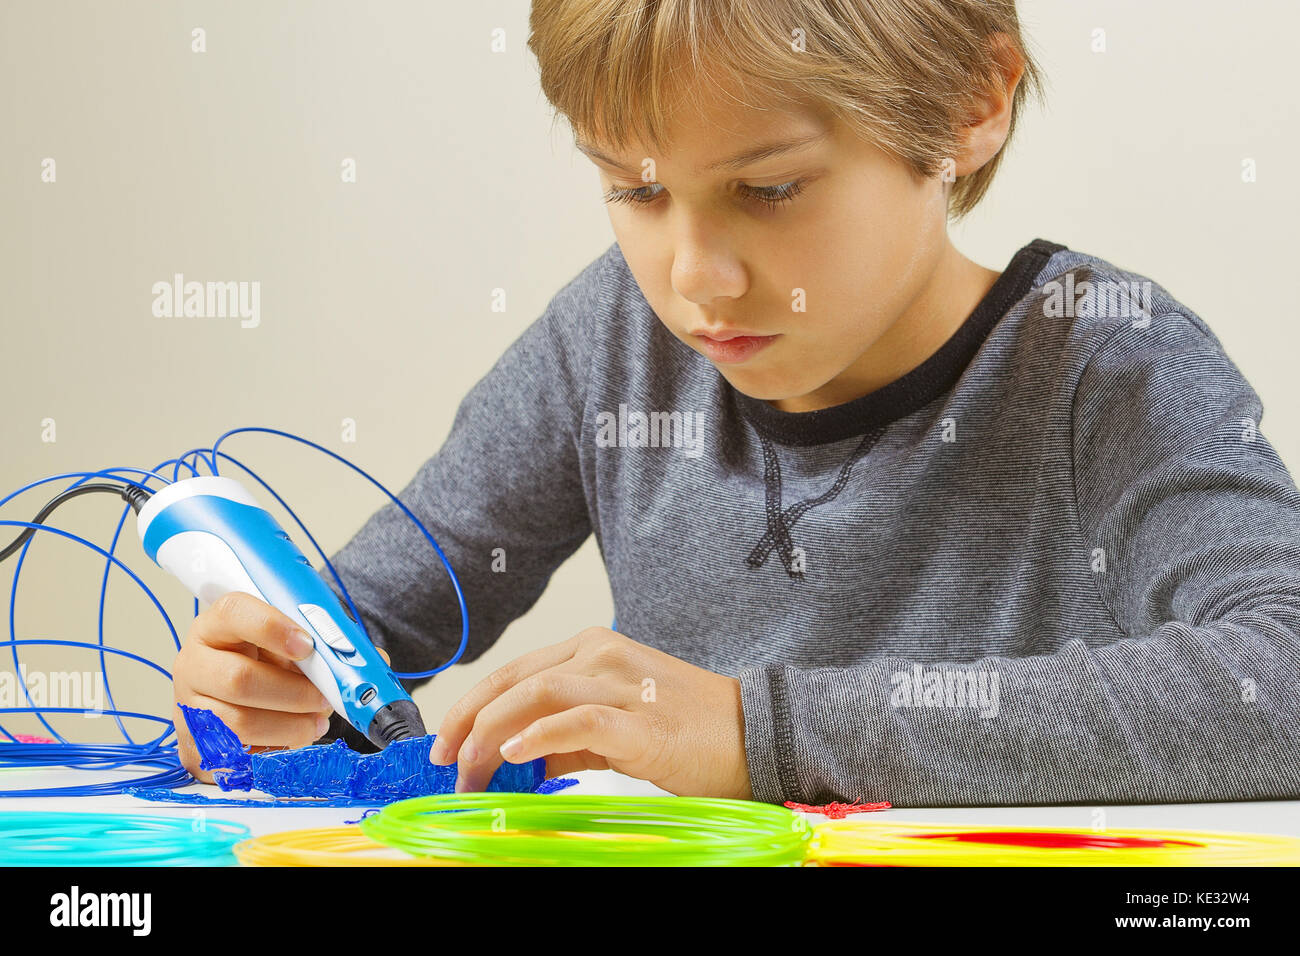 Pluma de impresión 3d niños fotografías e imágenes de alta resolución -  Alamy